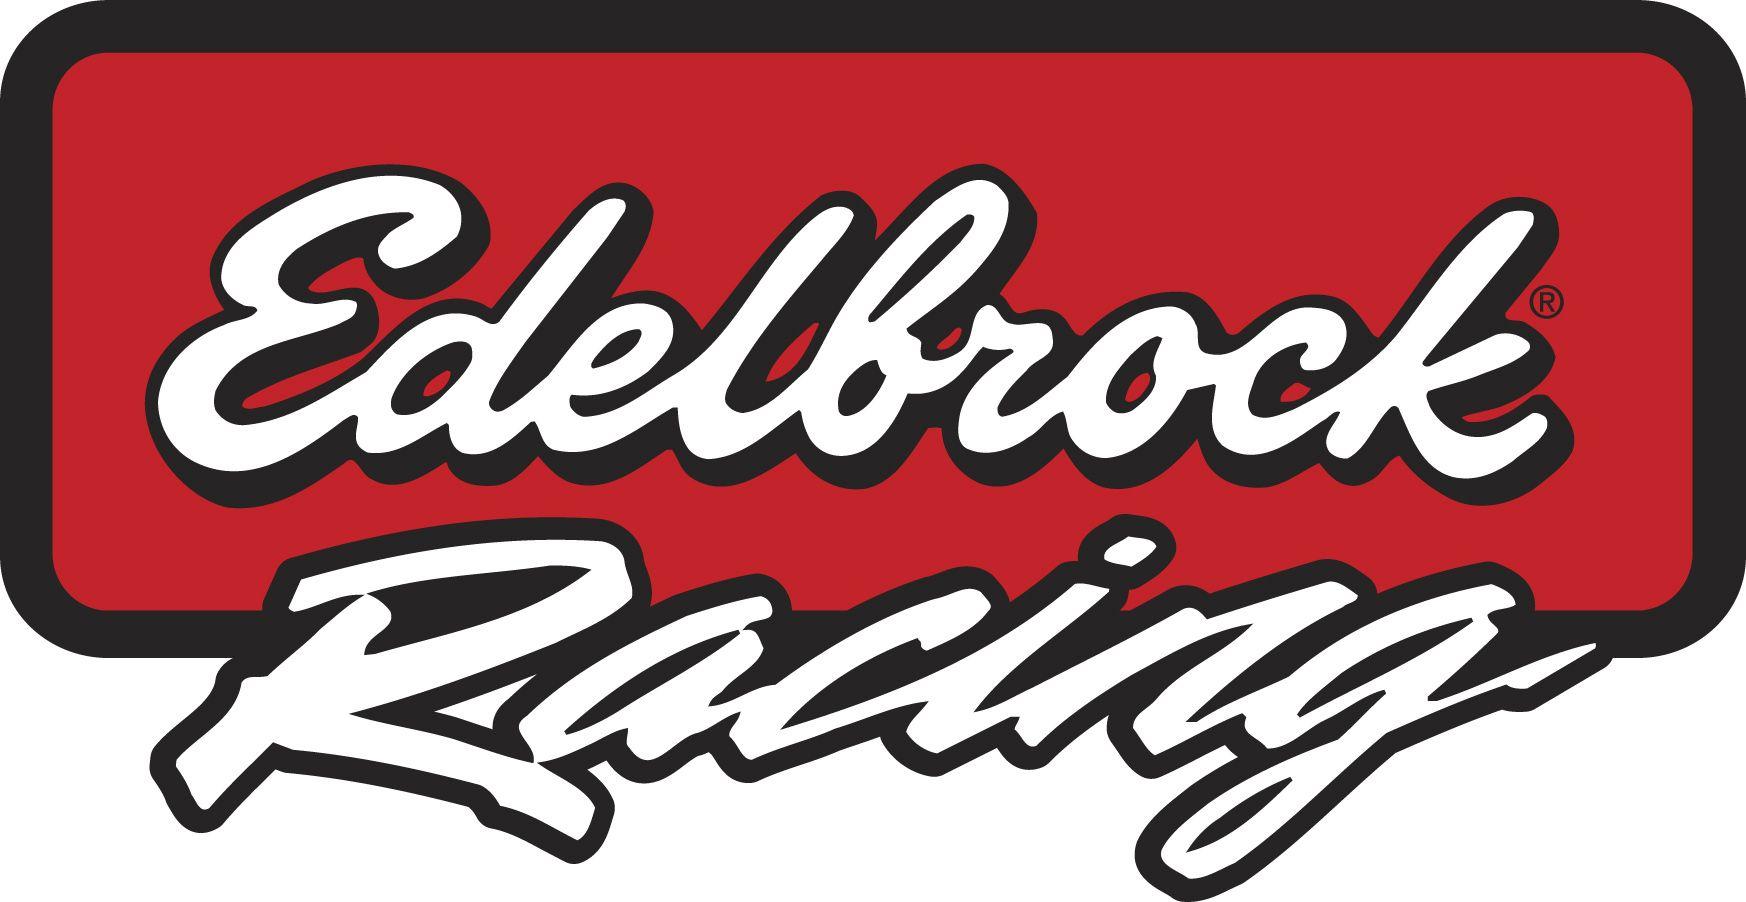 Edelbrock Logo - Index Of /Edelbrock Logos